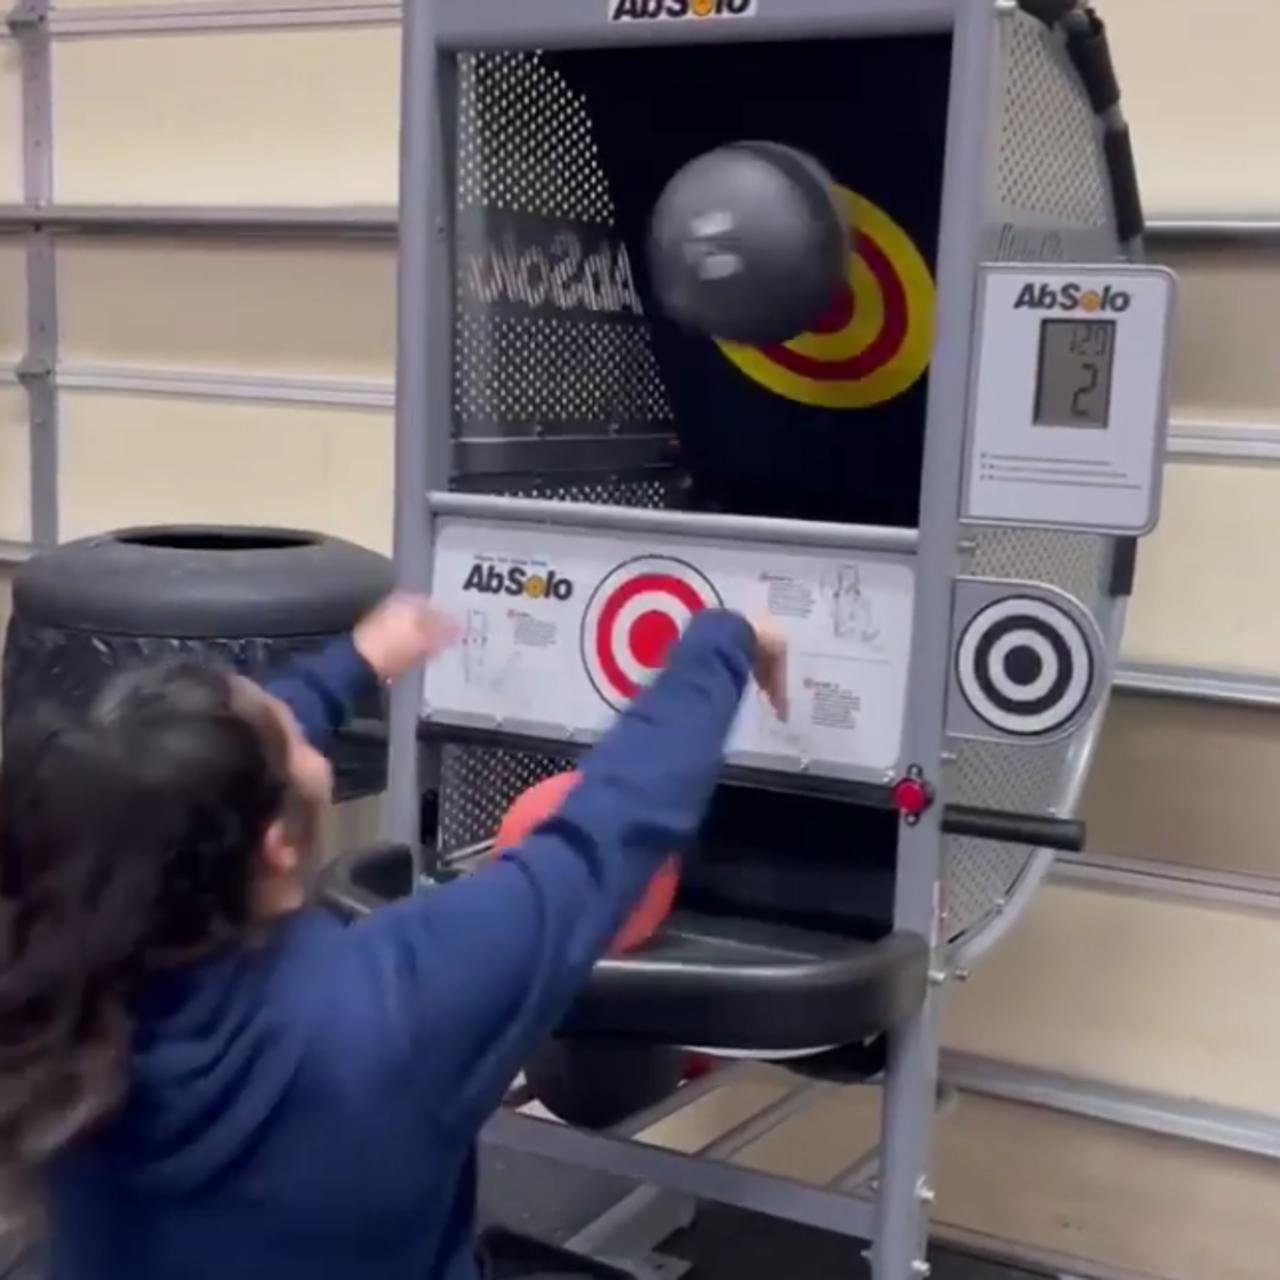 Exercise using this arcade-style machine